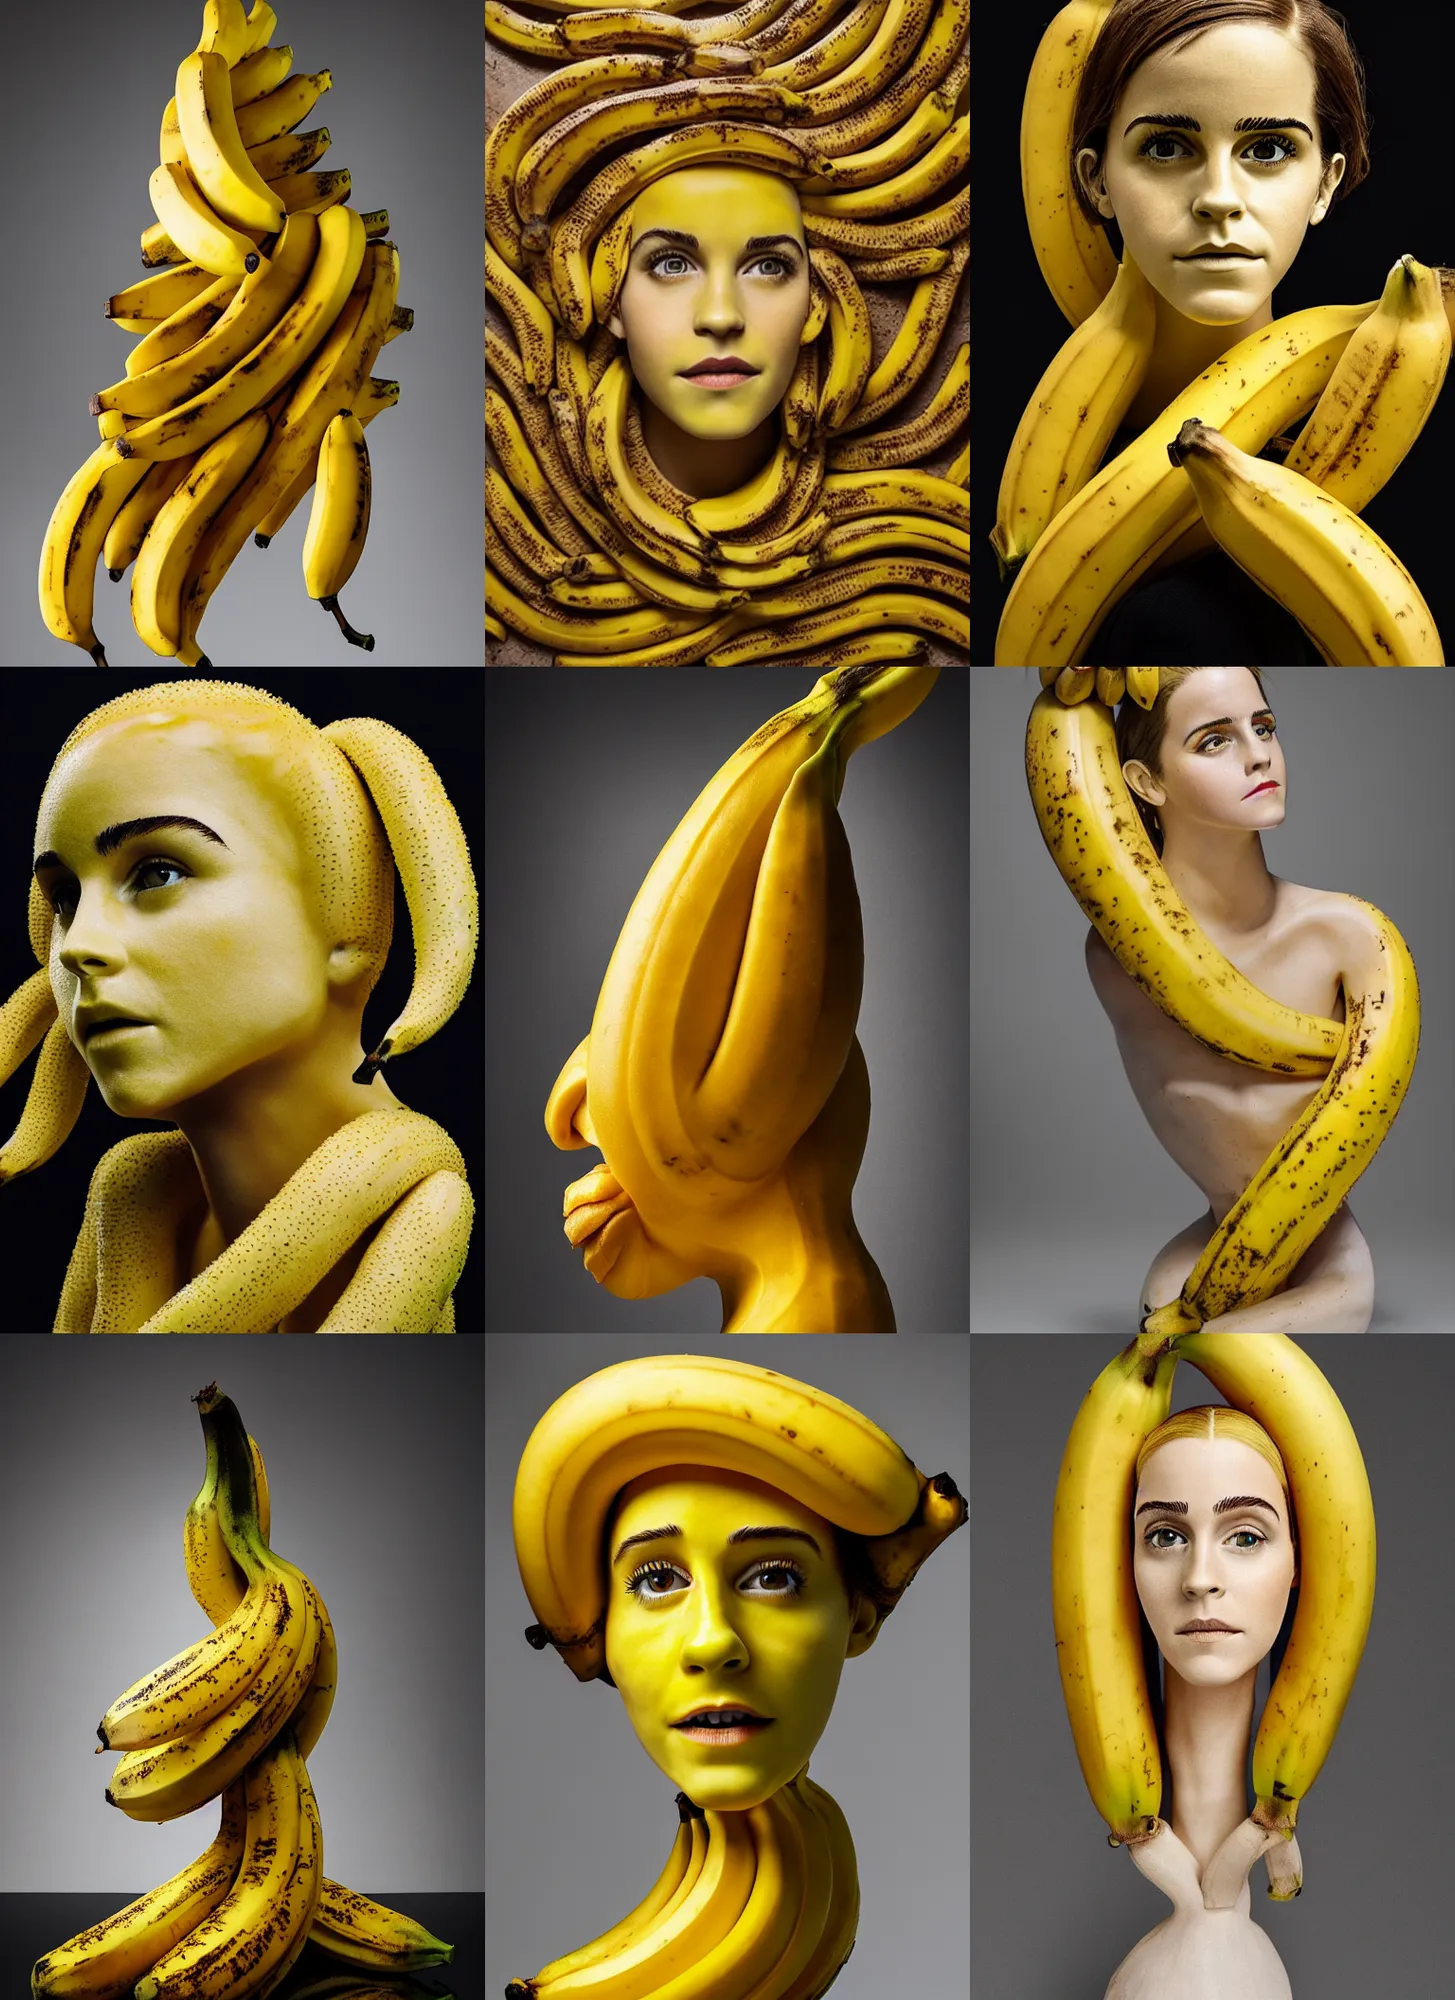 Prompt: surreal banana sculpture of emma watson, entirely made of bananas, studio lighting